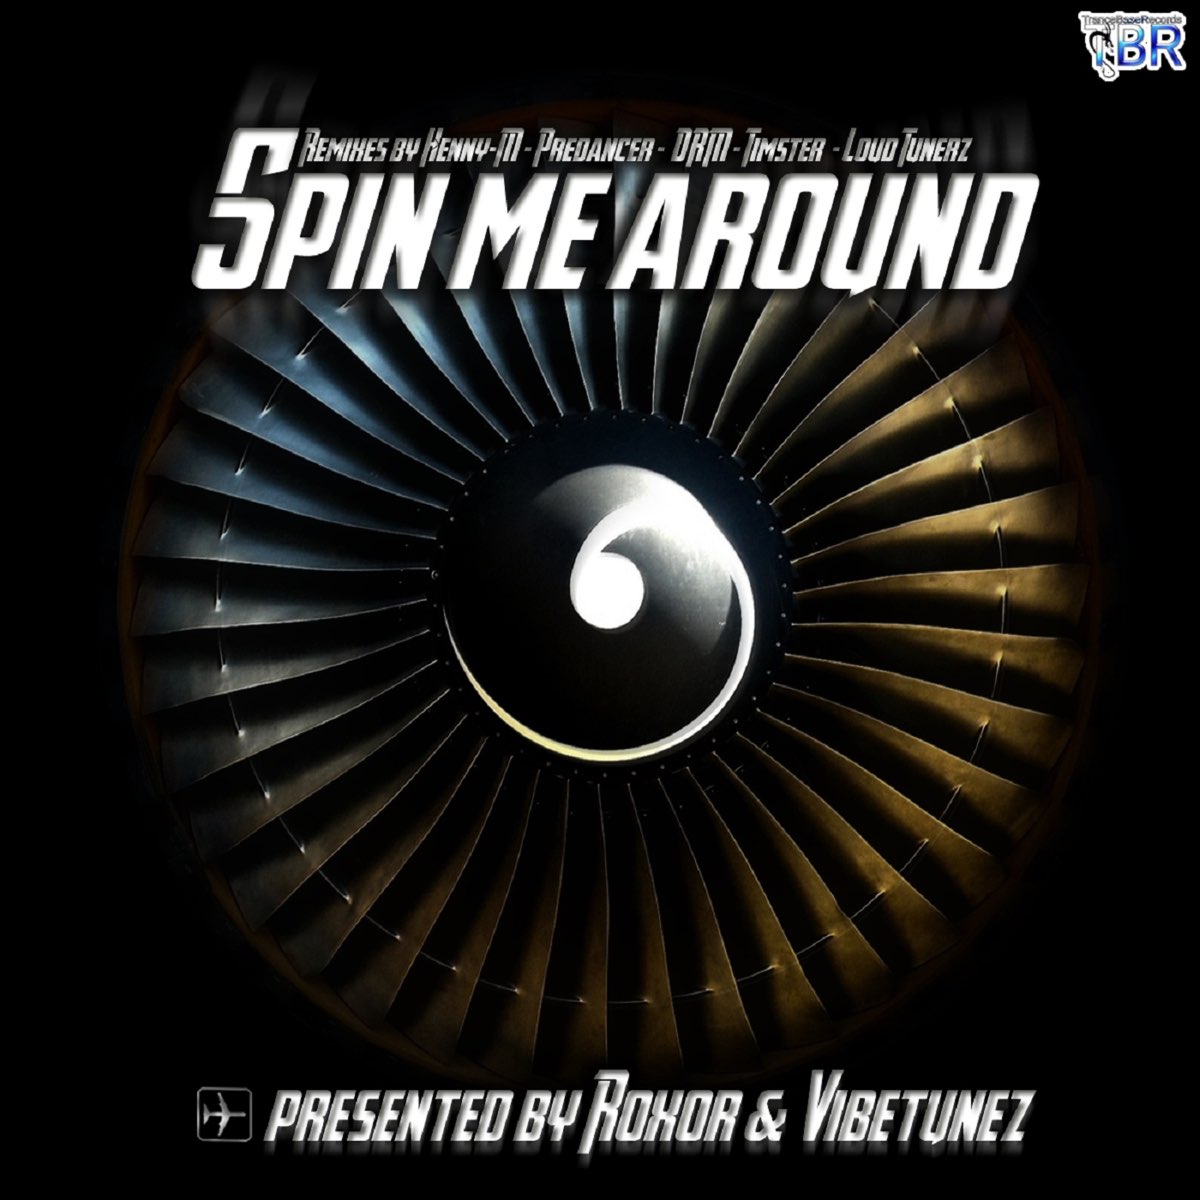 Spin музыка. DJ Spin one. Spin around песня 2016.